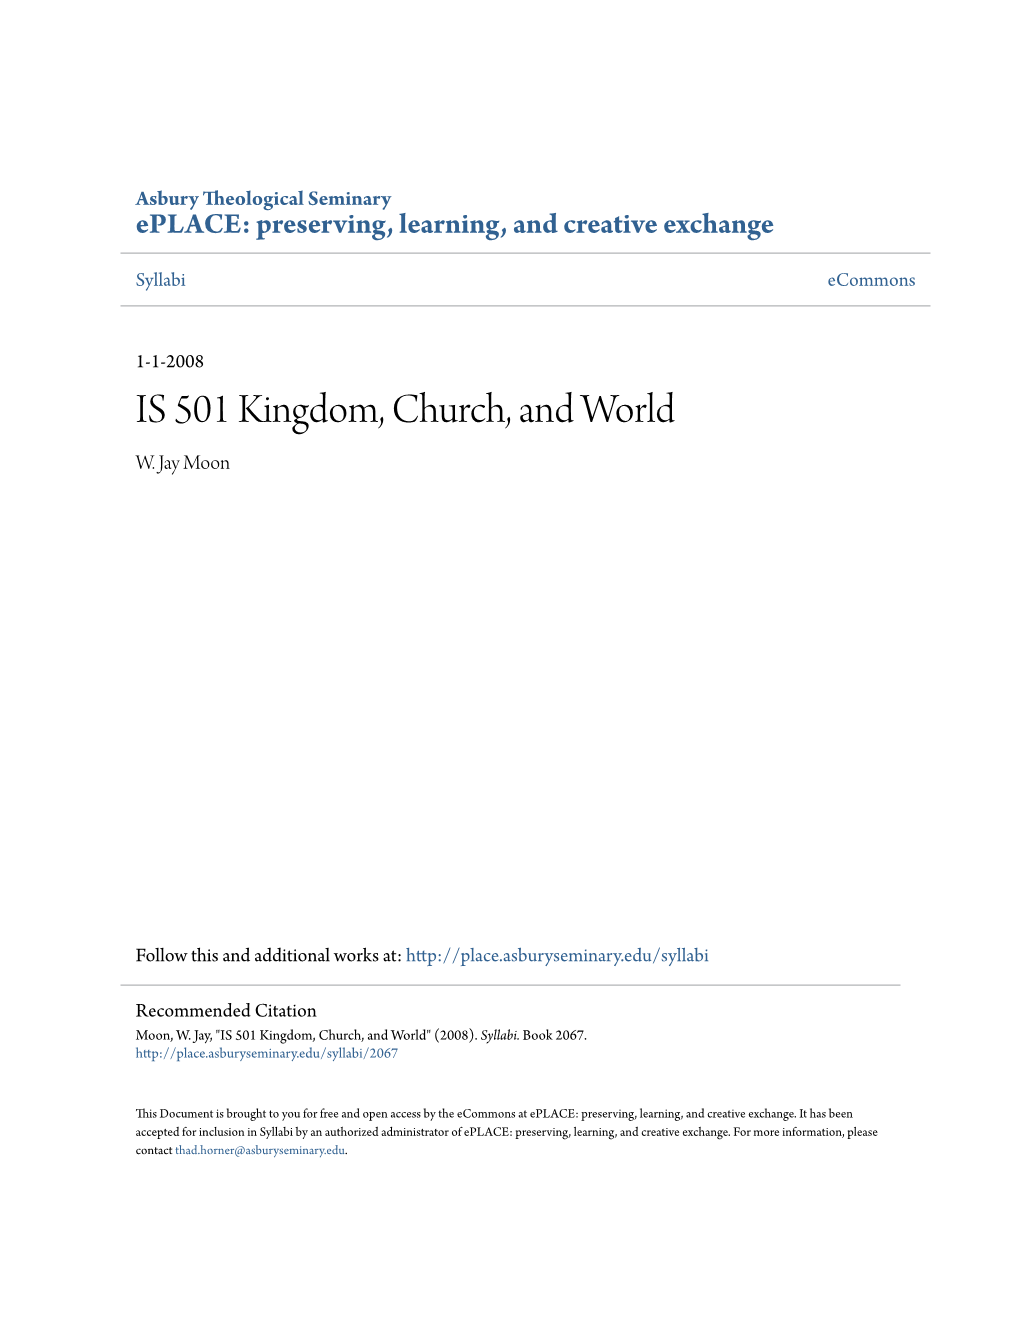 IS 501 Kingdom, Church, and World W